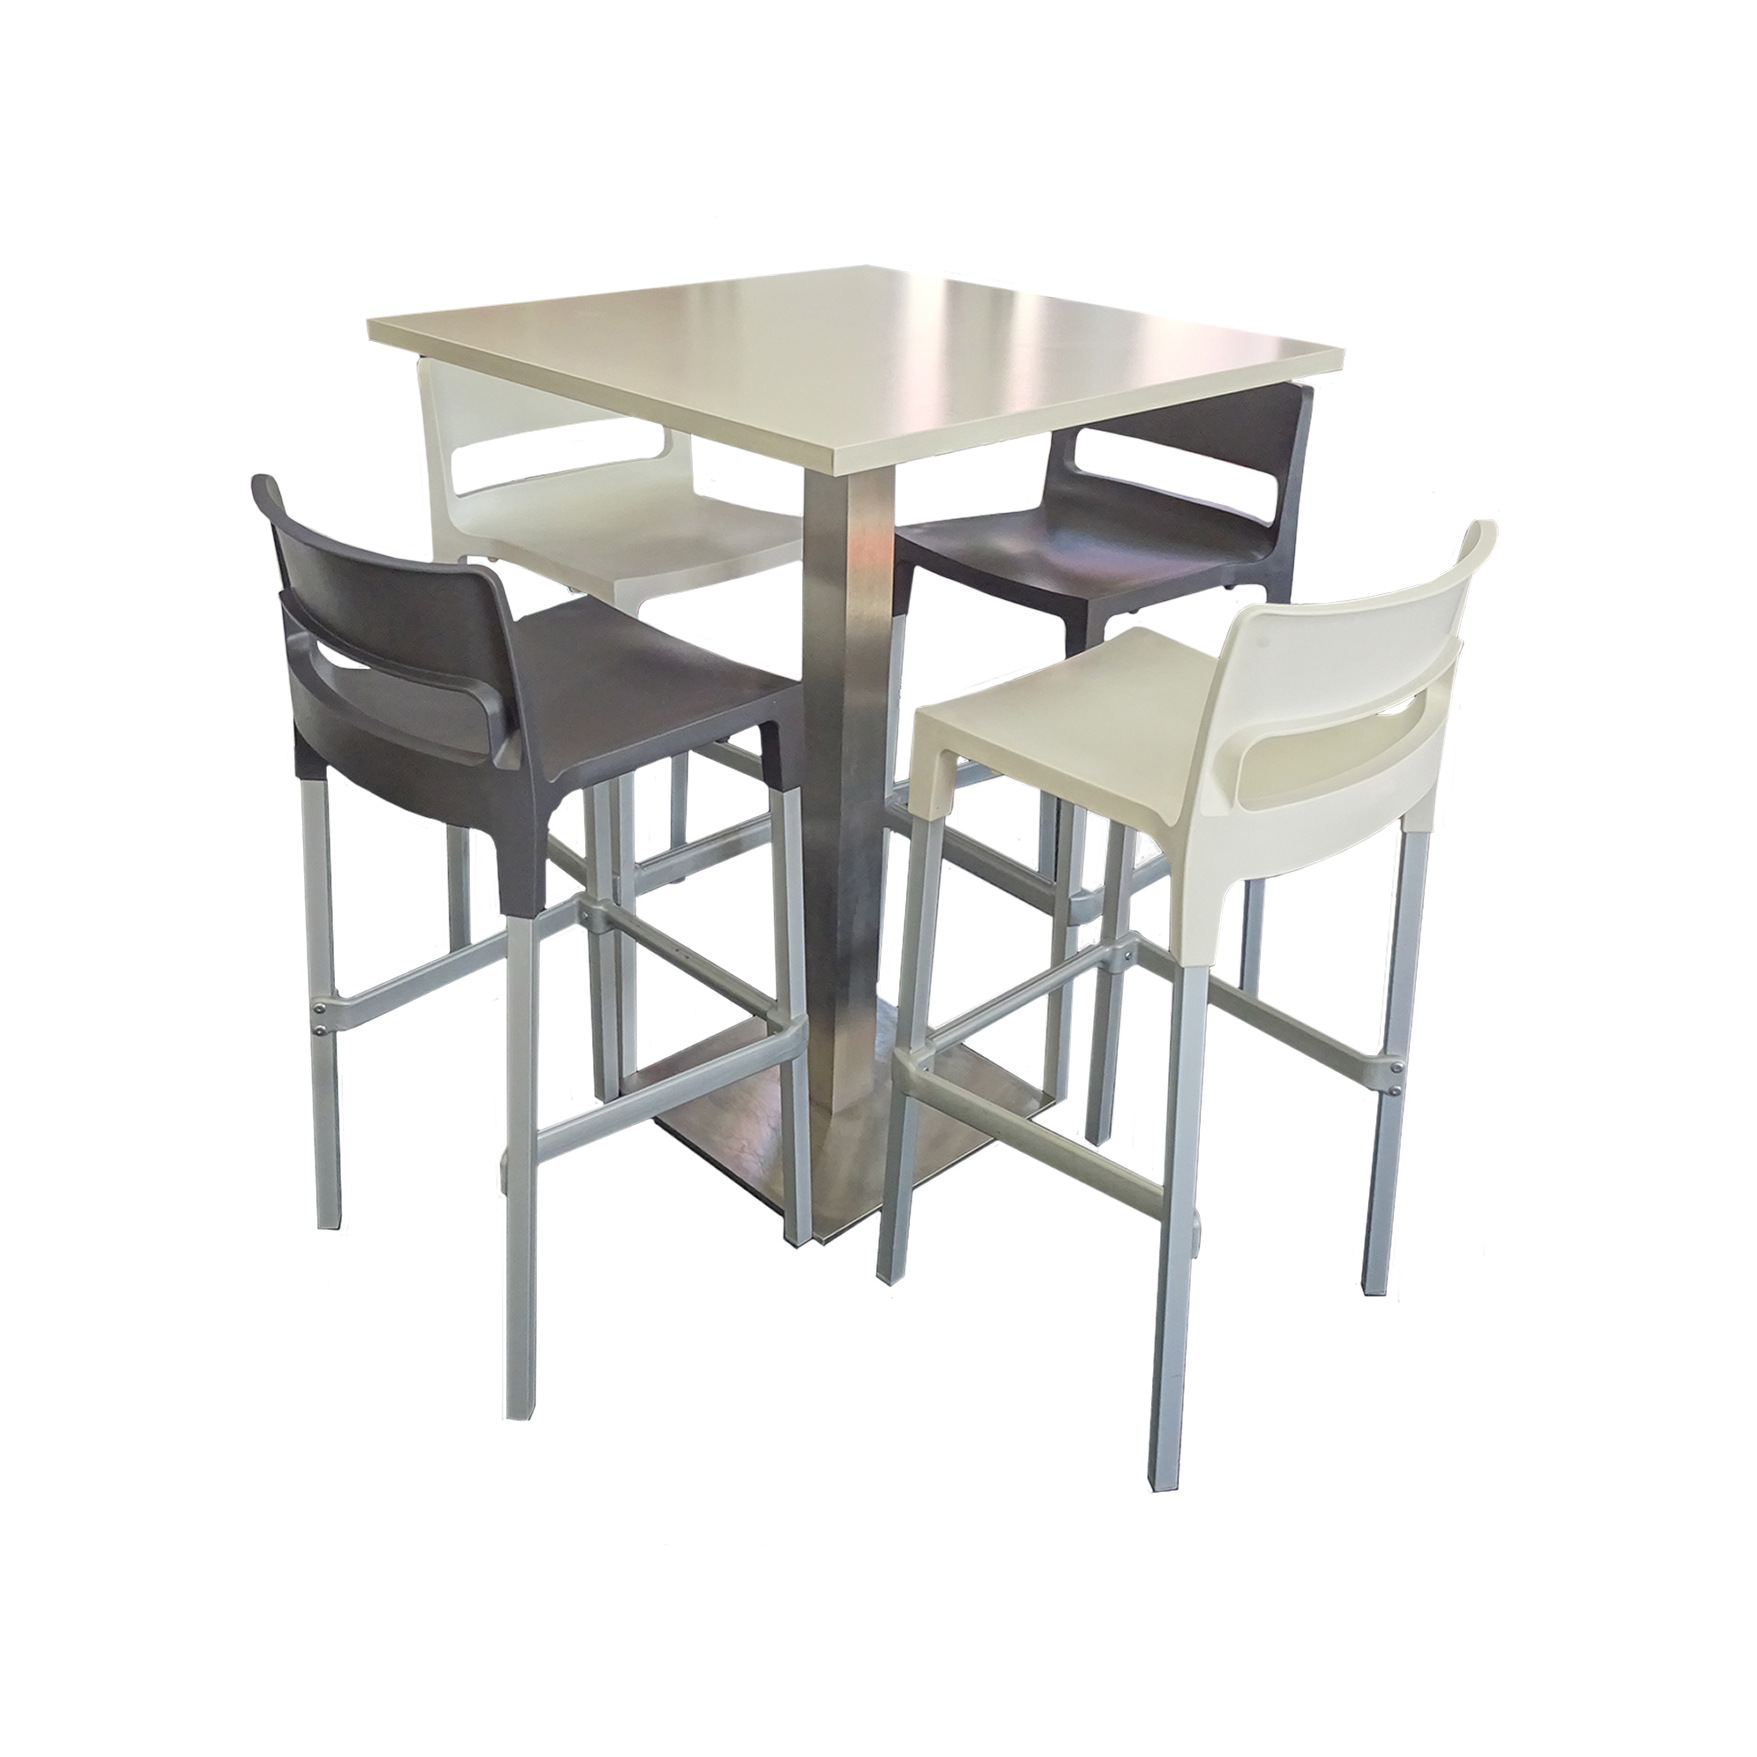 Educated furniture pavo barleaner table for school staffroom or lunchroom